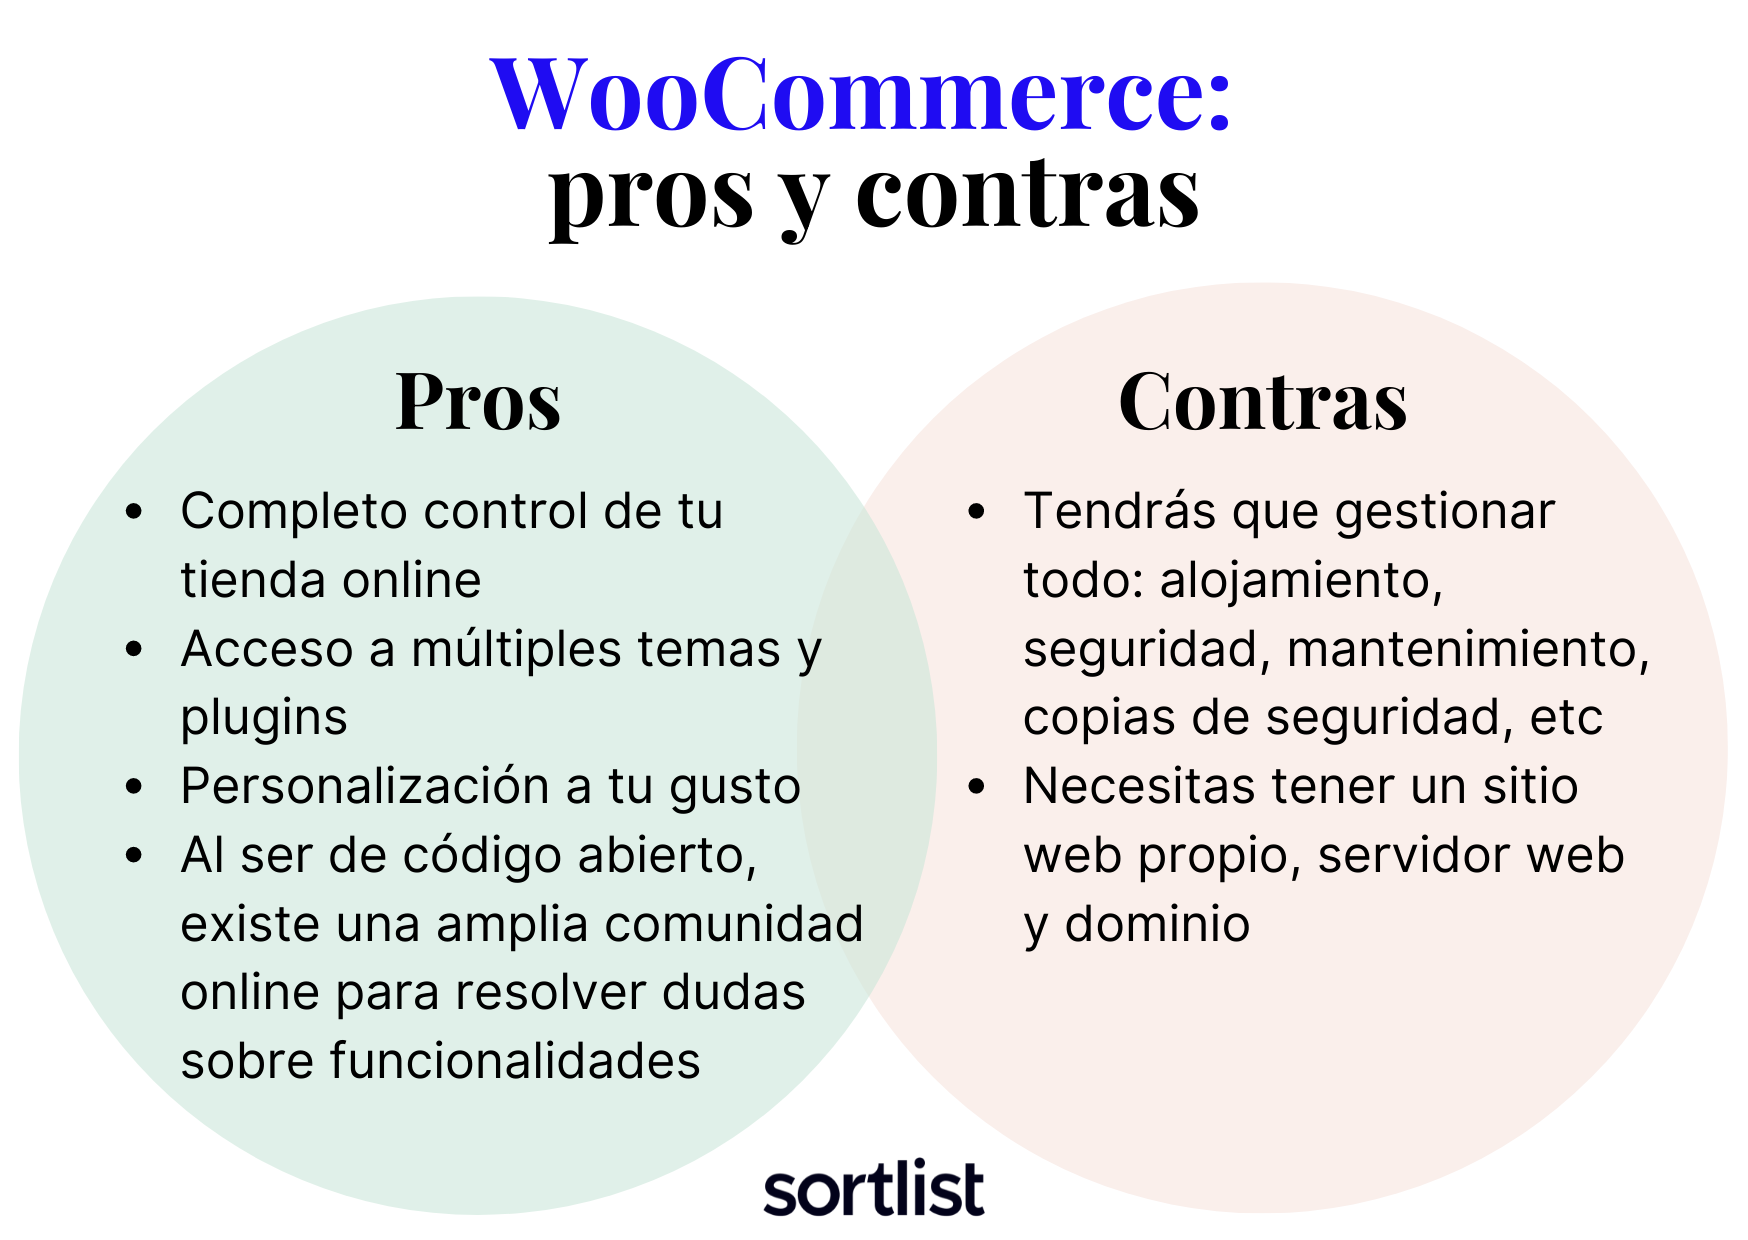 Woocommerce vs shopify: pros y contras de woocommerce